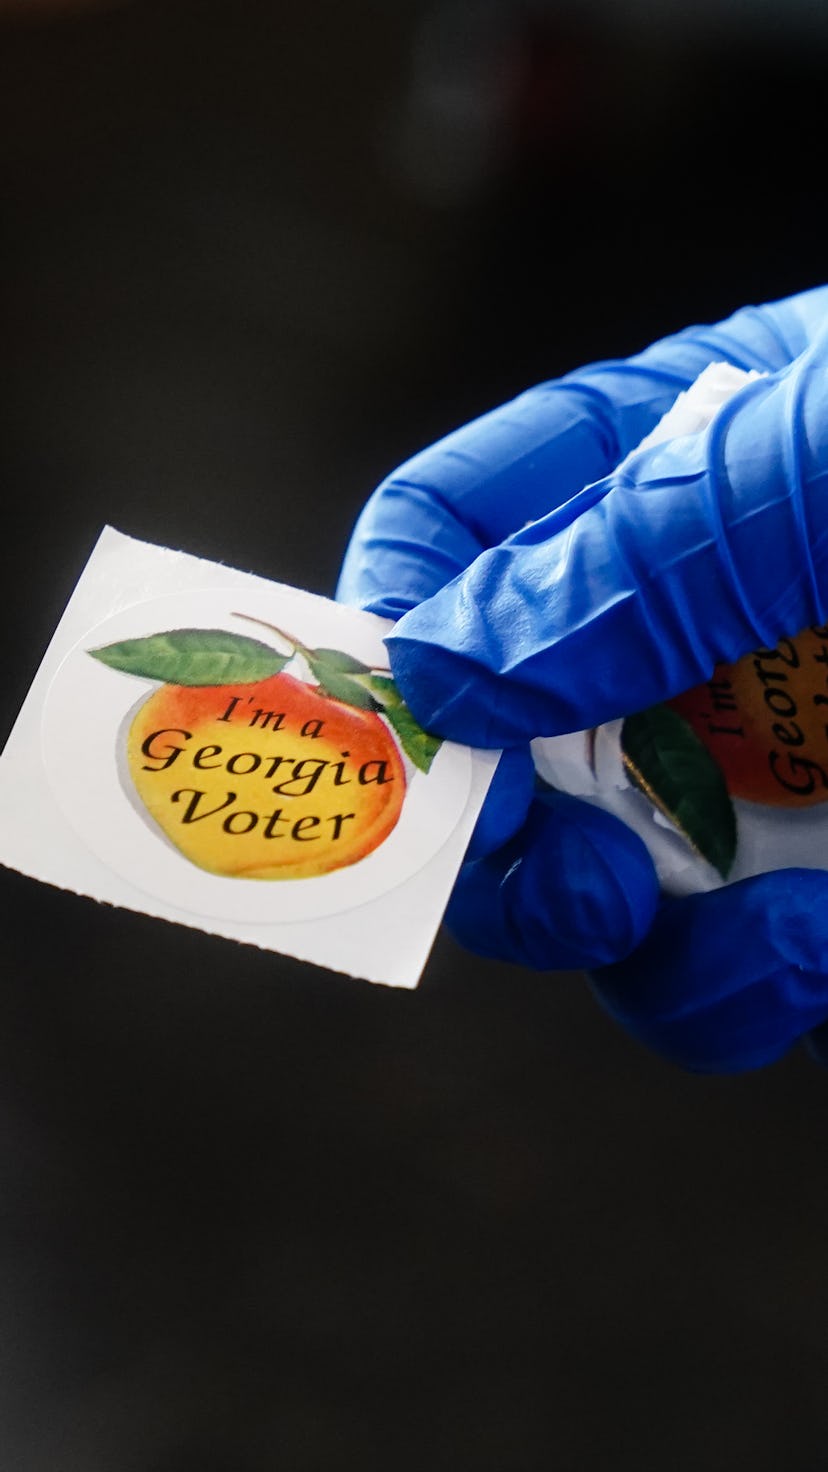 A Georgia voting sticker